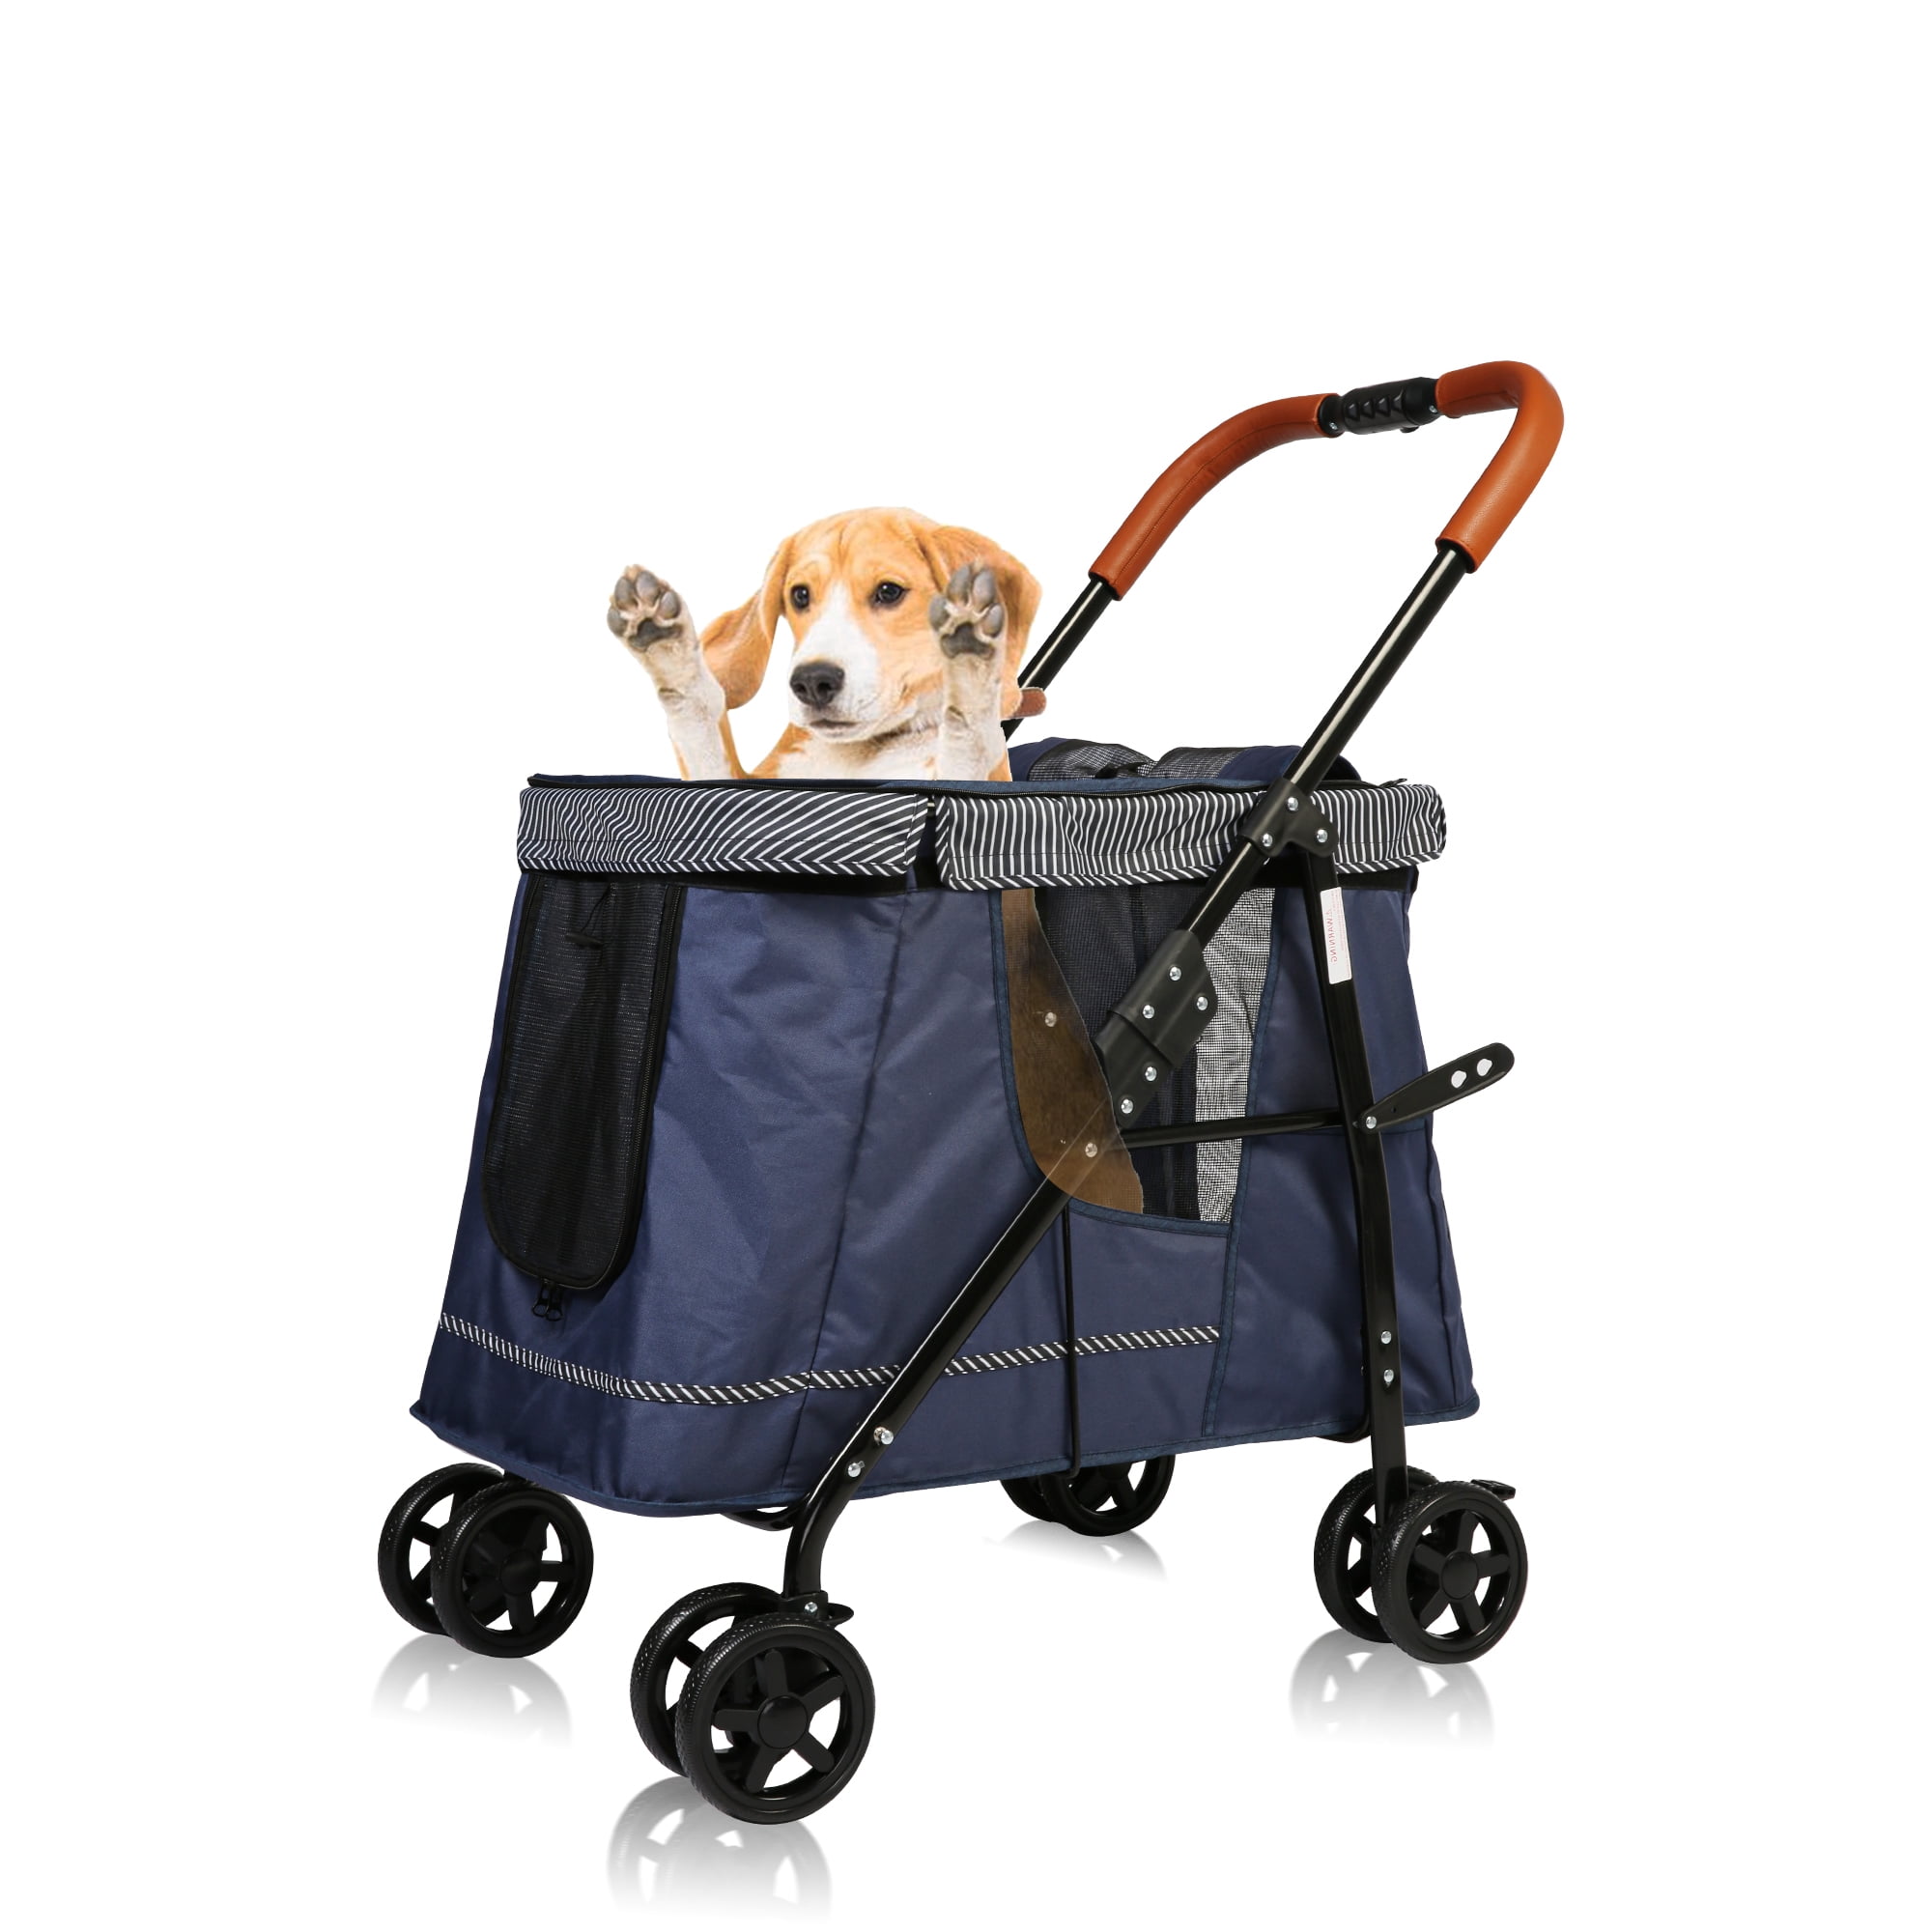 Dog Cat Stroller Deluxe Walk Folding Travel Cart for Small Medium Large Pet